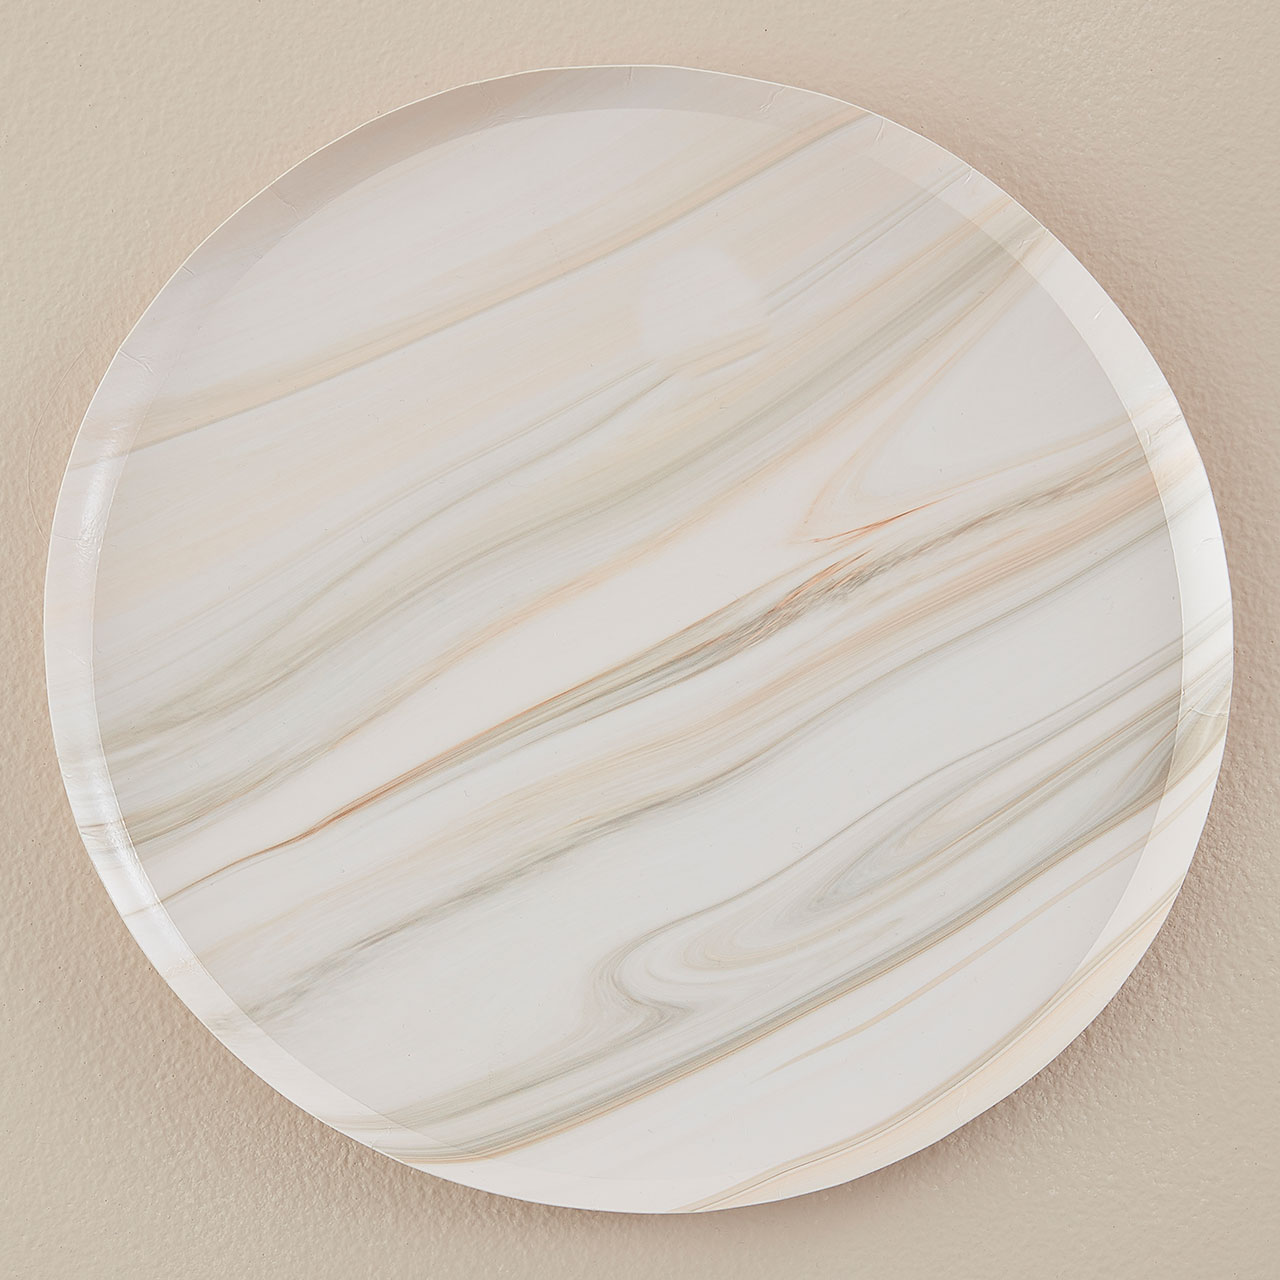 Plates - Natural Marble